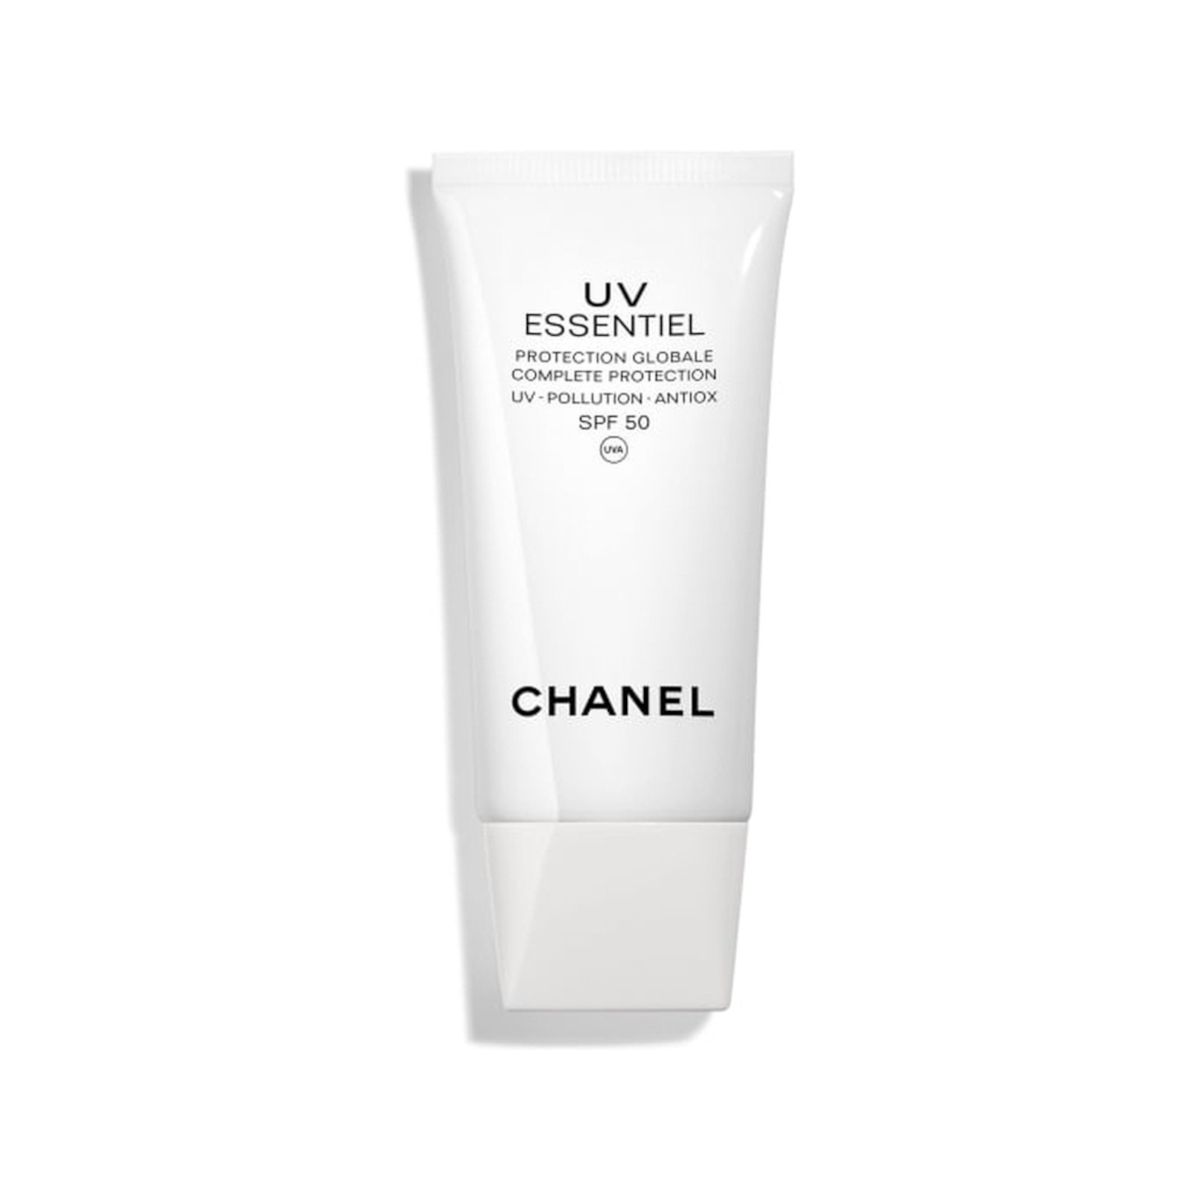 Chanel UV Essentiel Protection Globale SPF50 30ml